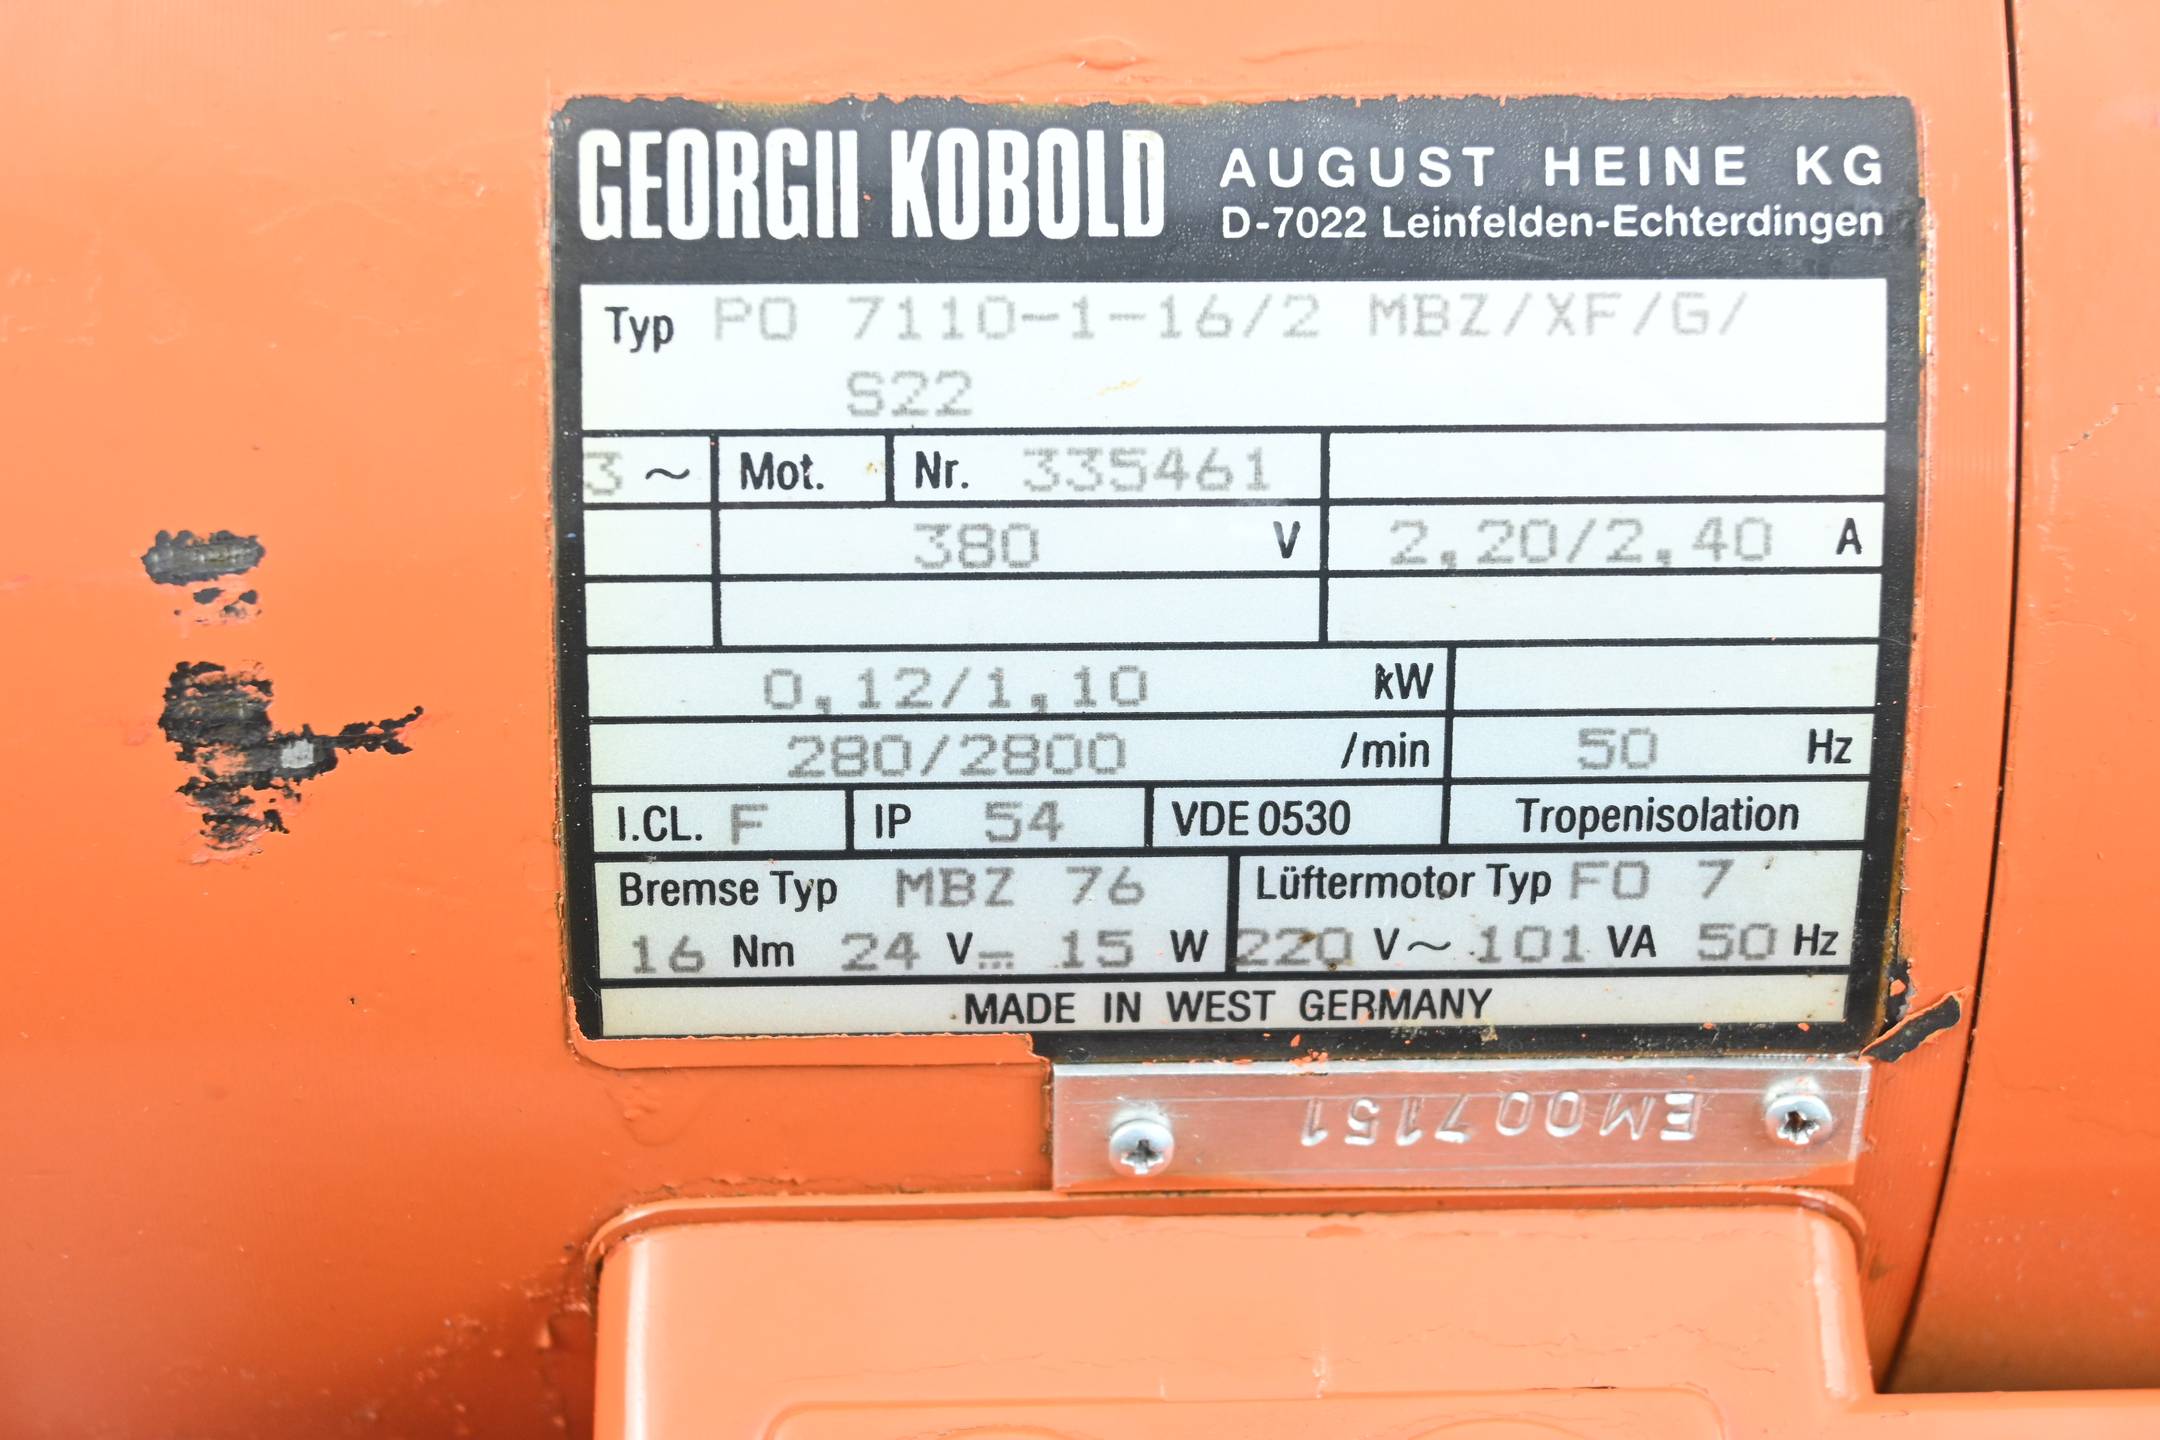 Georgii Kobold 3~ Motor PO 7110-1-16/2 MBZ/XF/G/S22 inkl. Lüfter 084024-150